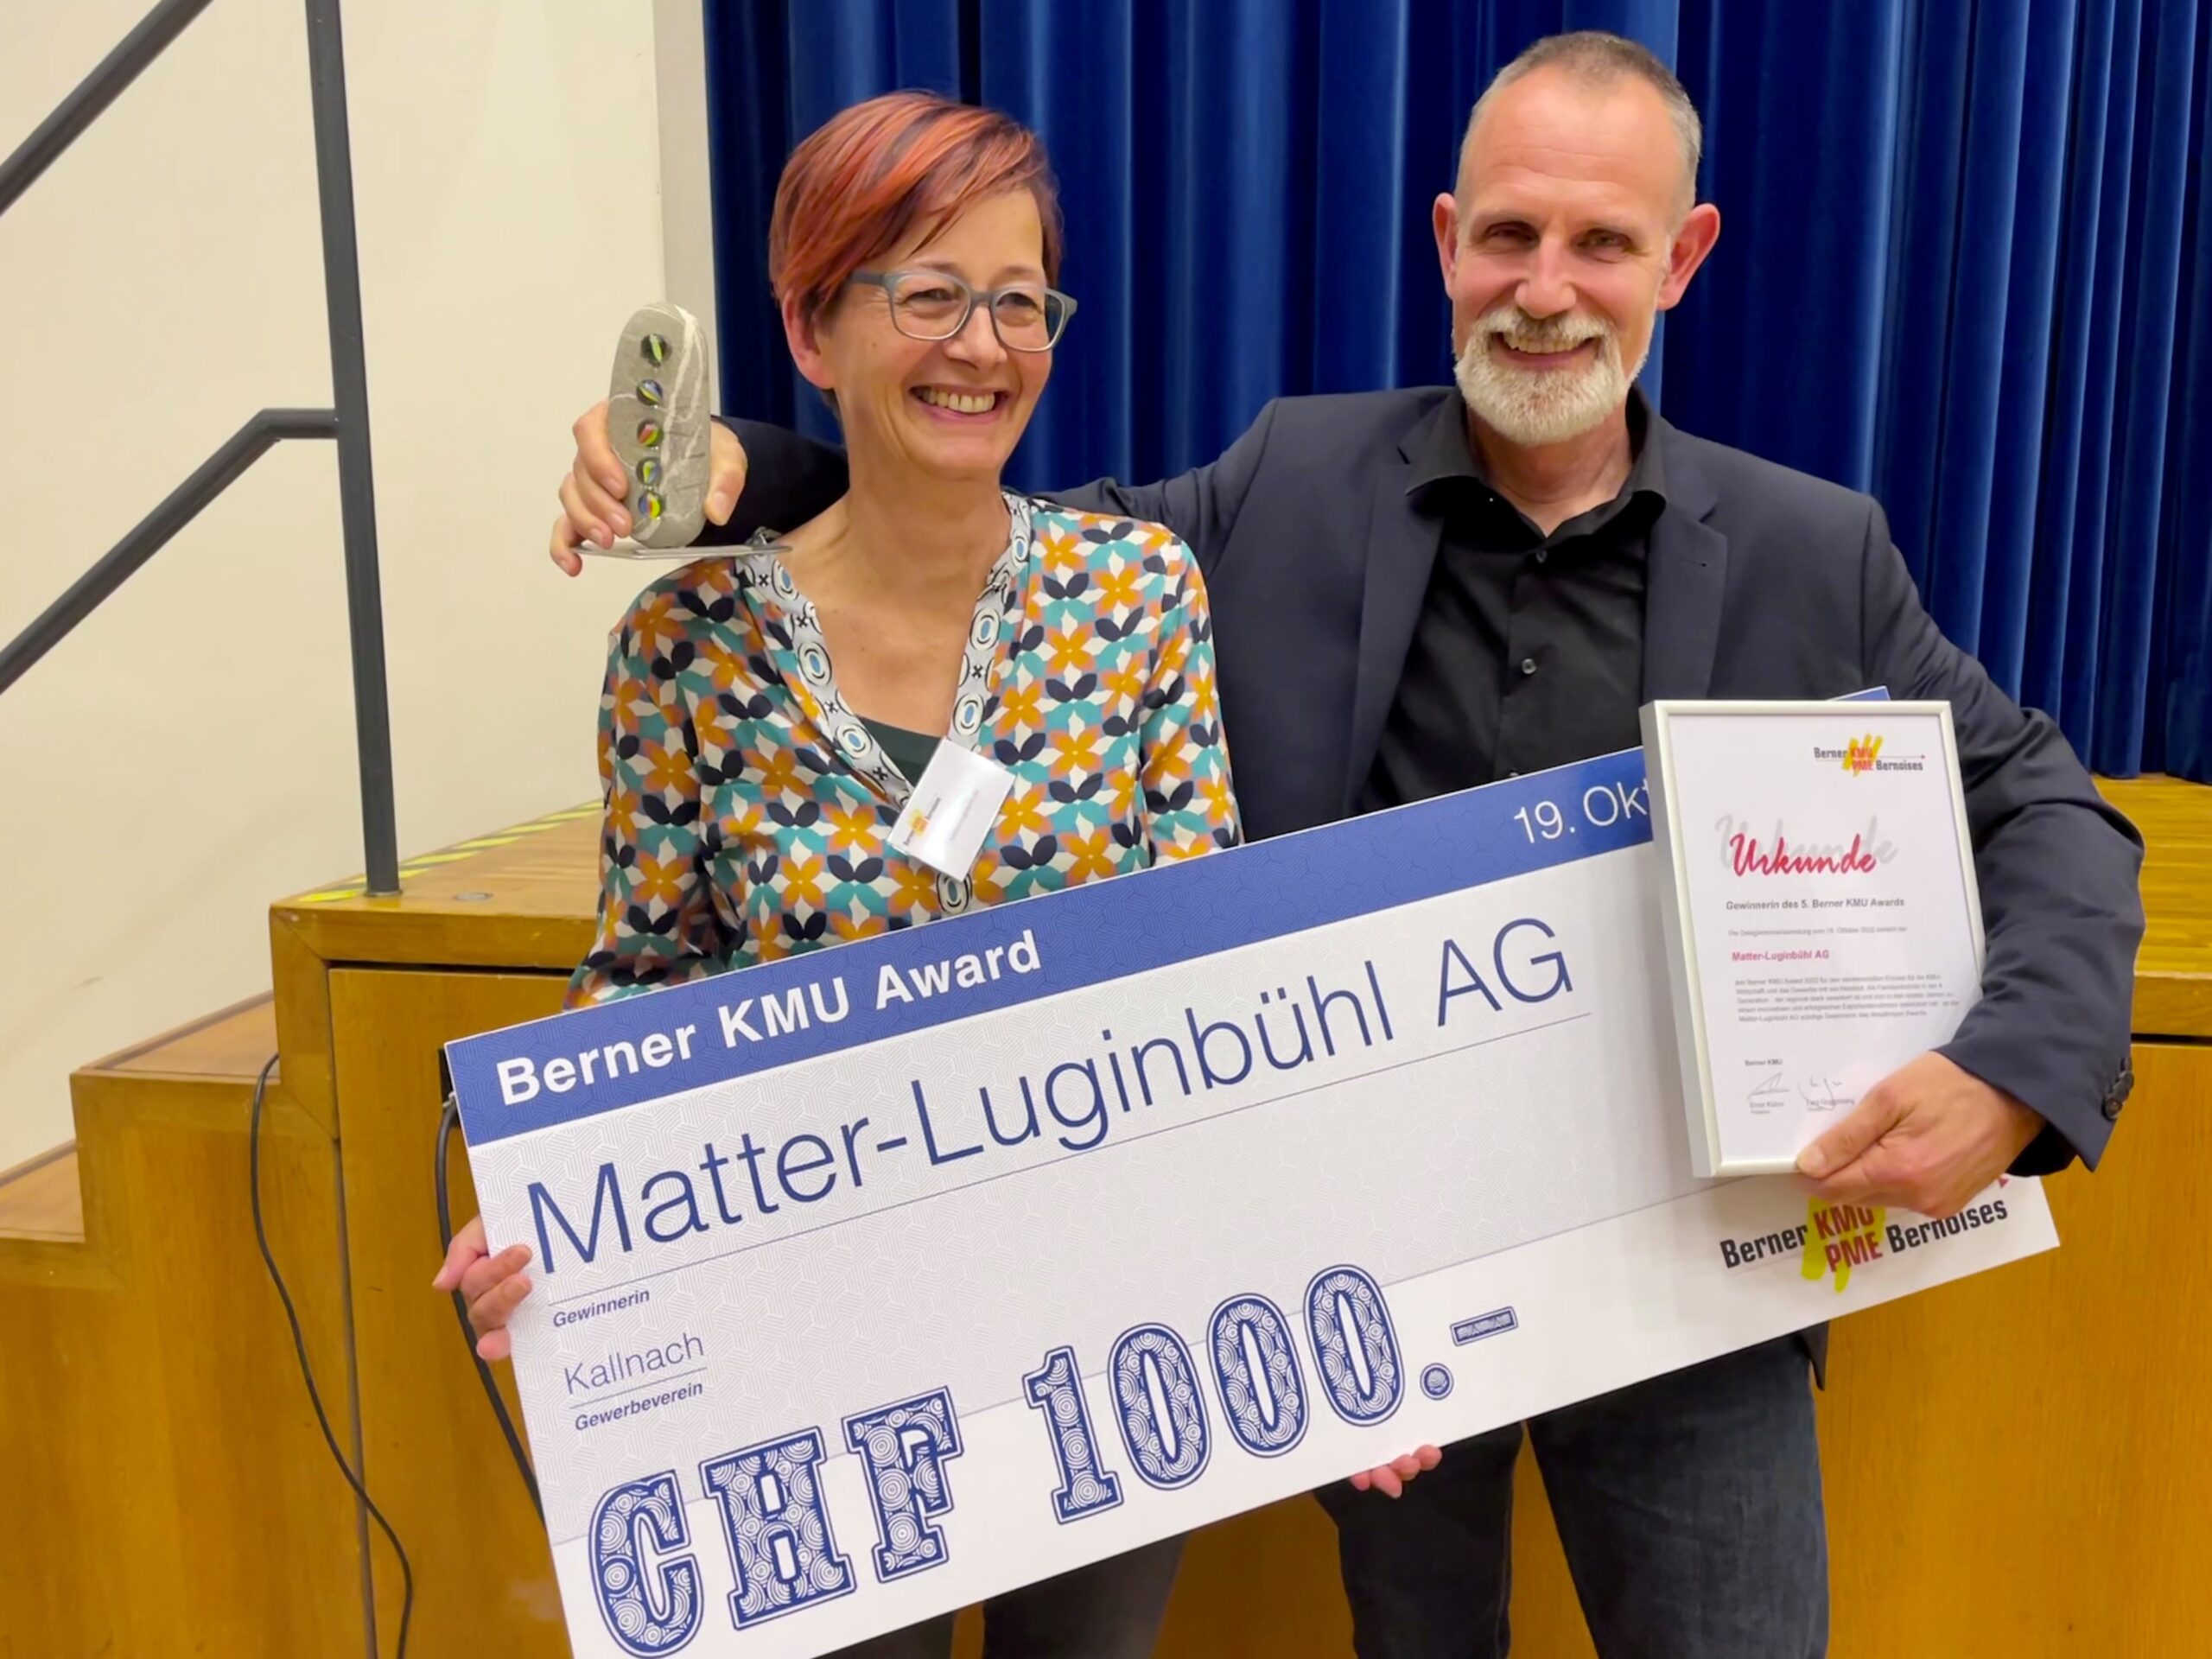 Matter-Luginbühl AG holt den Berner KMU Award 2022 ins Seeland!